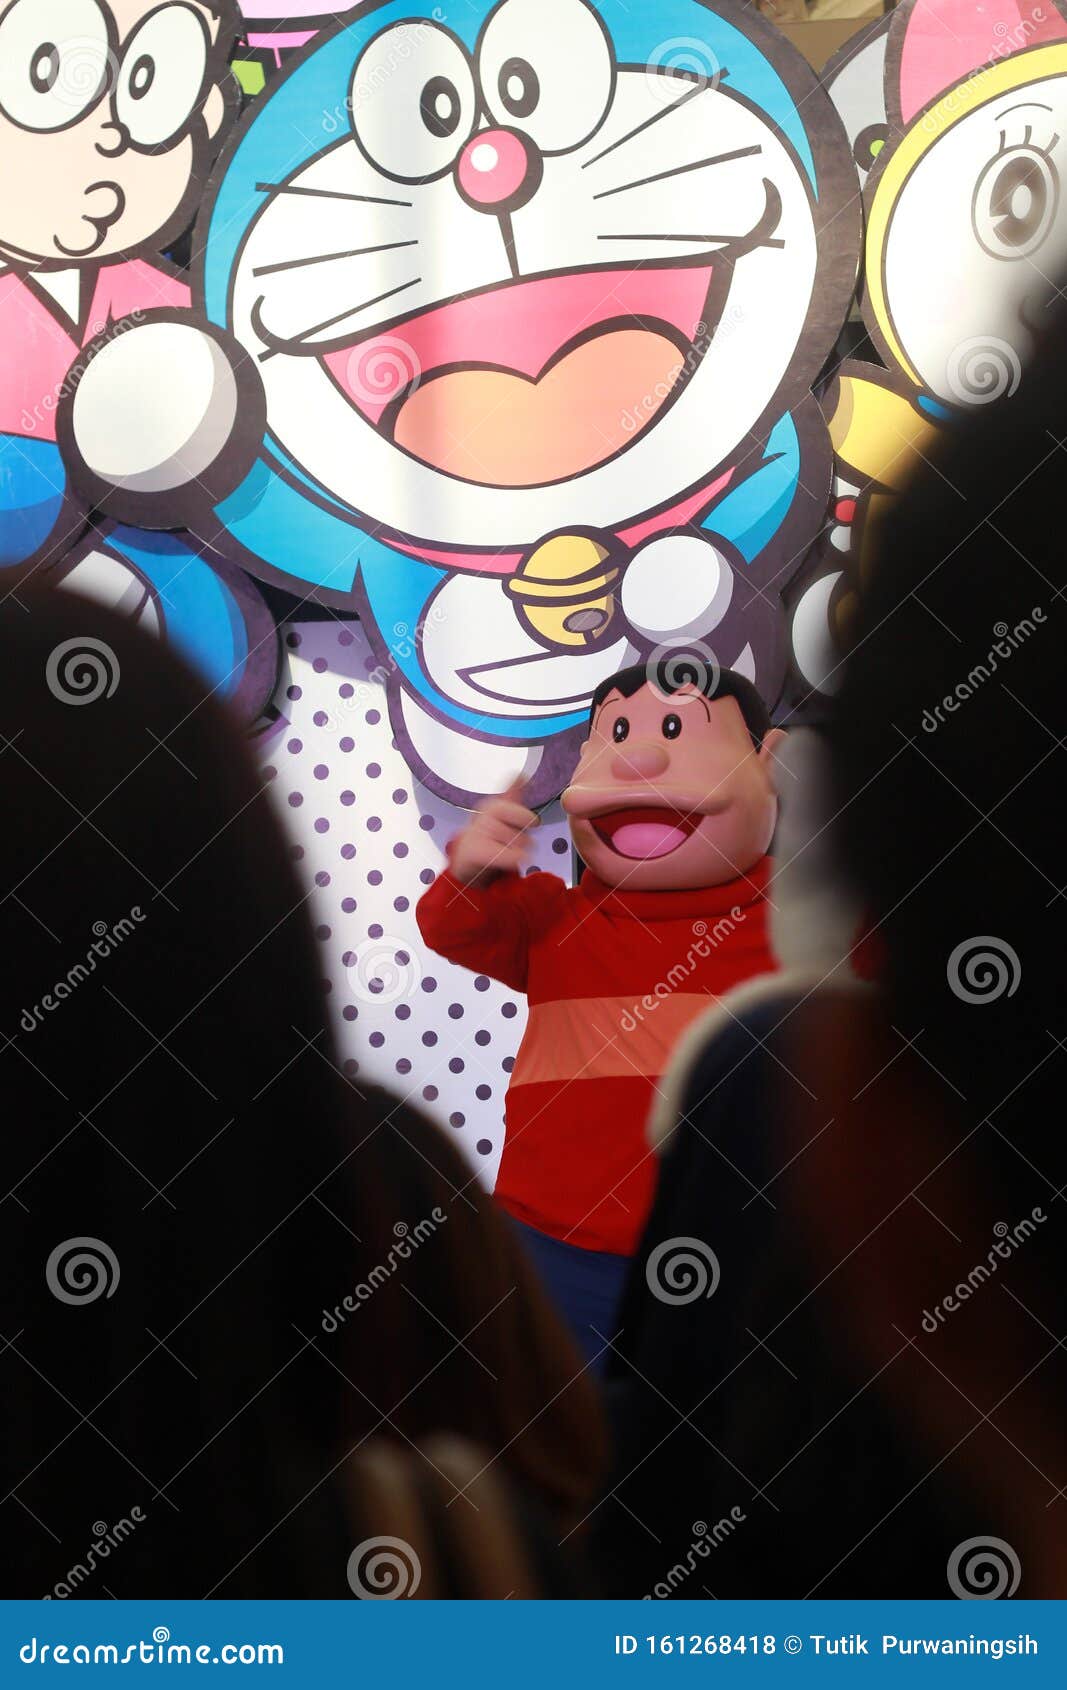 Top View, 23 June 2019, Doraemon, Nobi Nobita, Takeshi Goda or Giant,  Shizuka Minamoto, Suneo Honekawa Cartoon Character at AEON Editorial Stock  Photo - Image of view, stage: 161268418